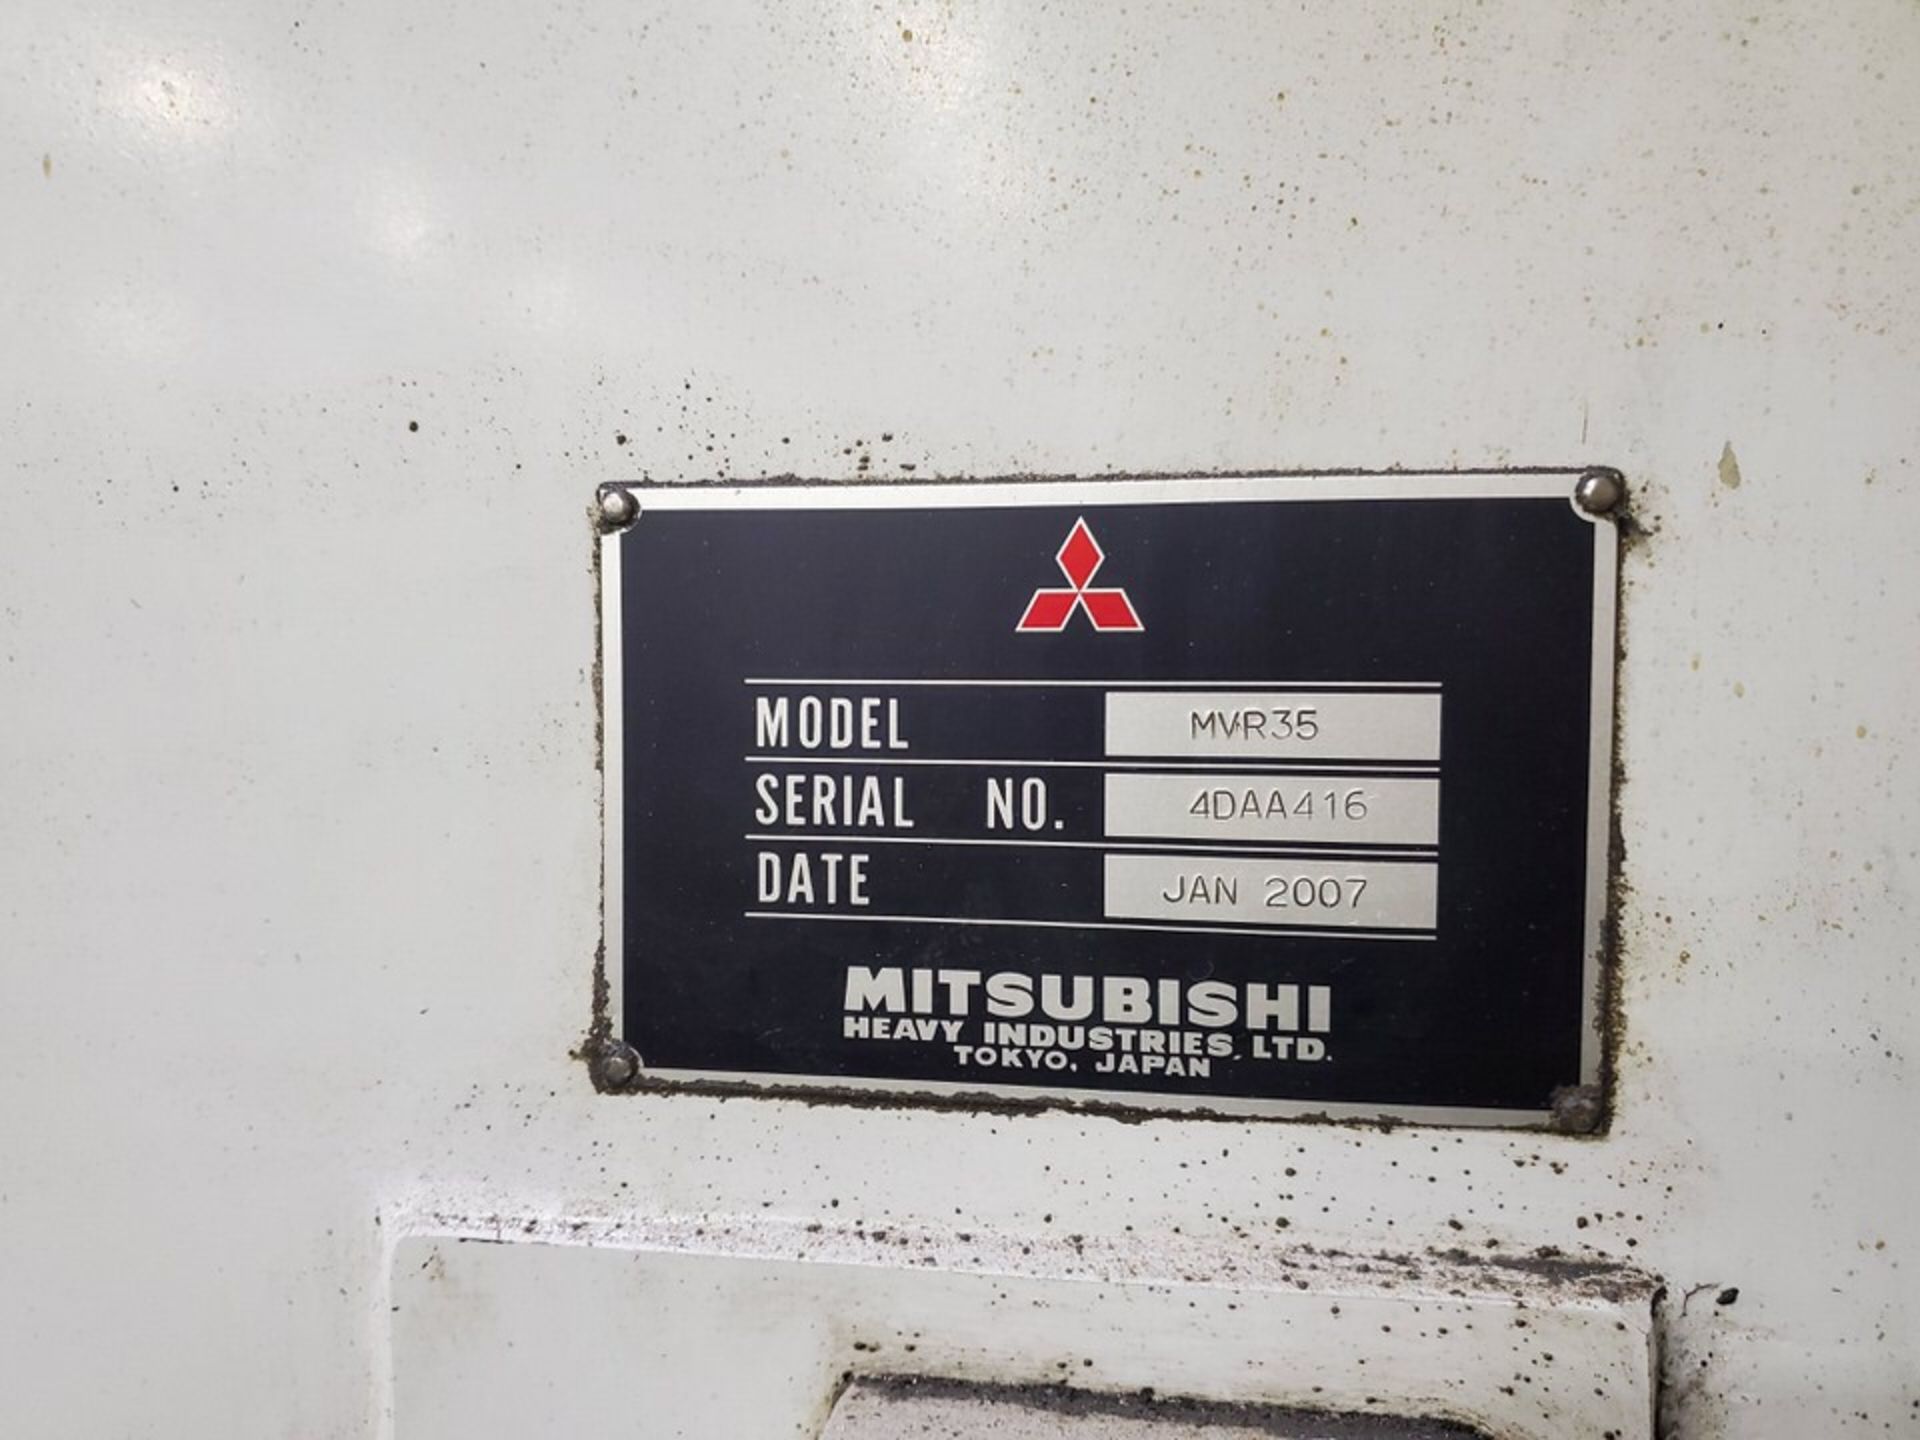 MITSUBISHI MVR35 Gantry Machining Center (LOCATION: DETROIT,MI) - Image 25 of 31